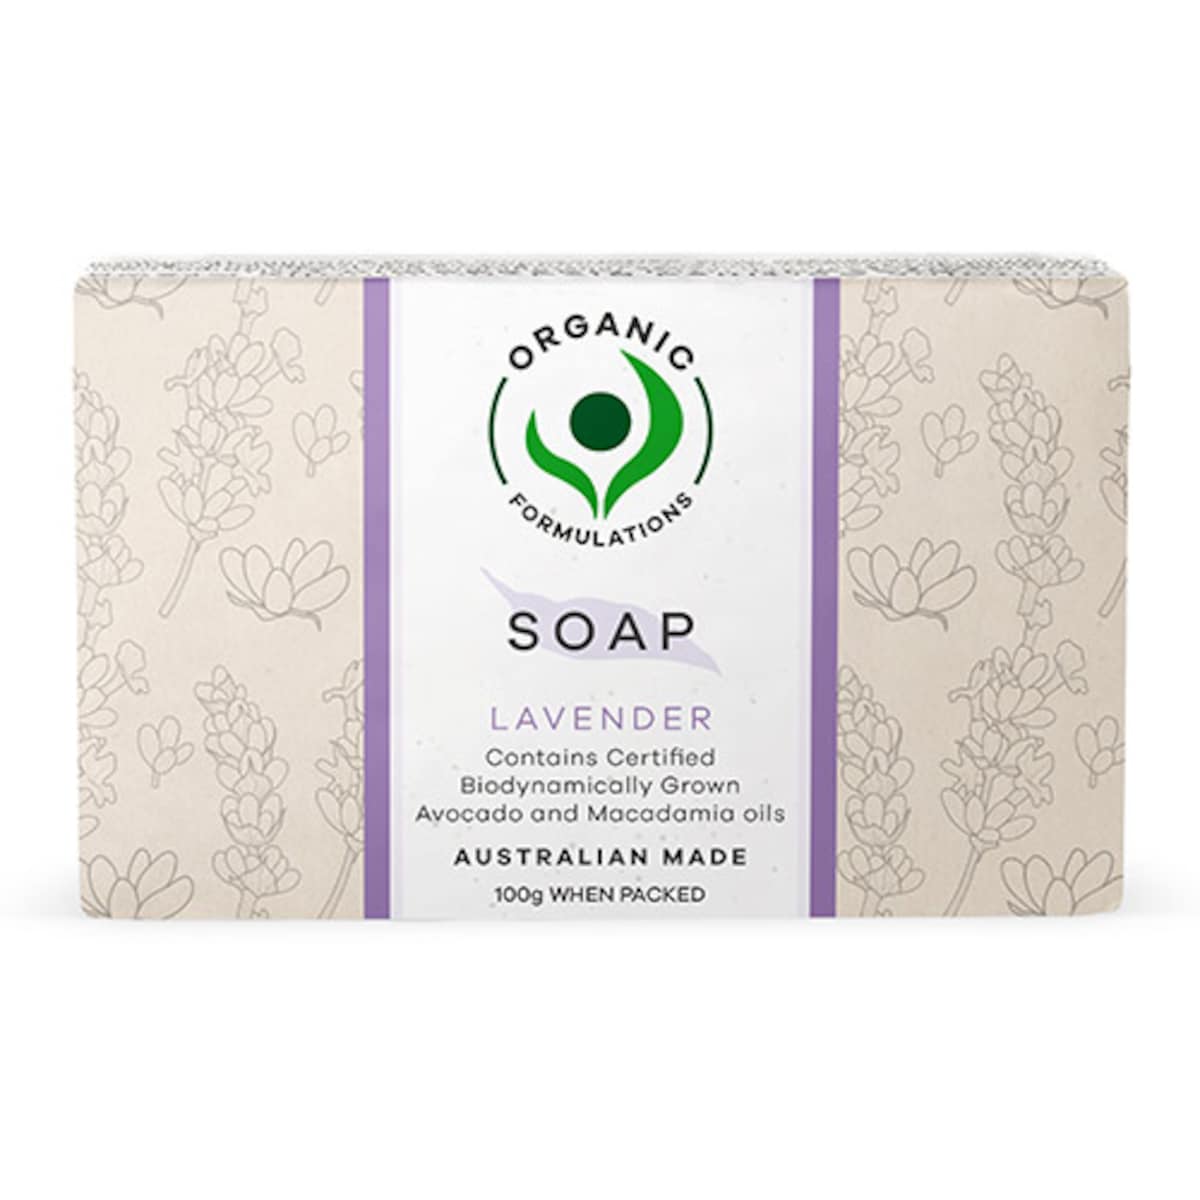 Organic Formulations Lavender Soap 100g